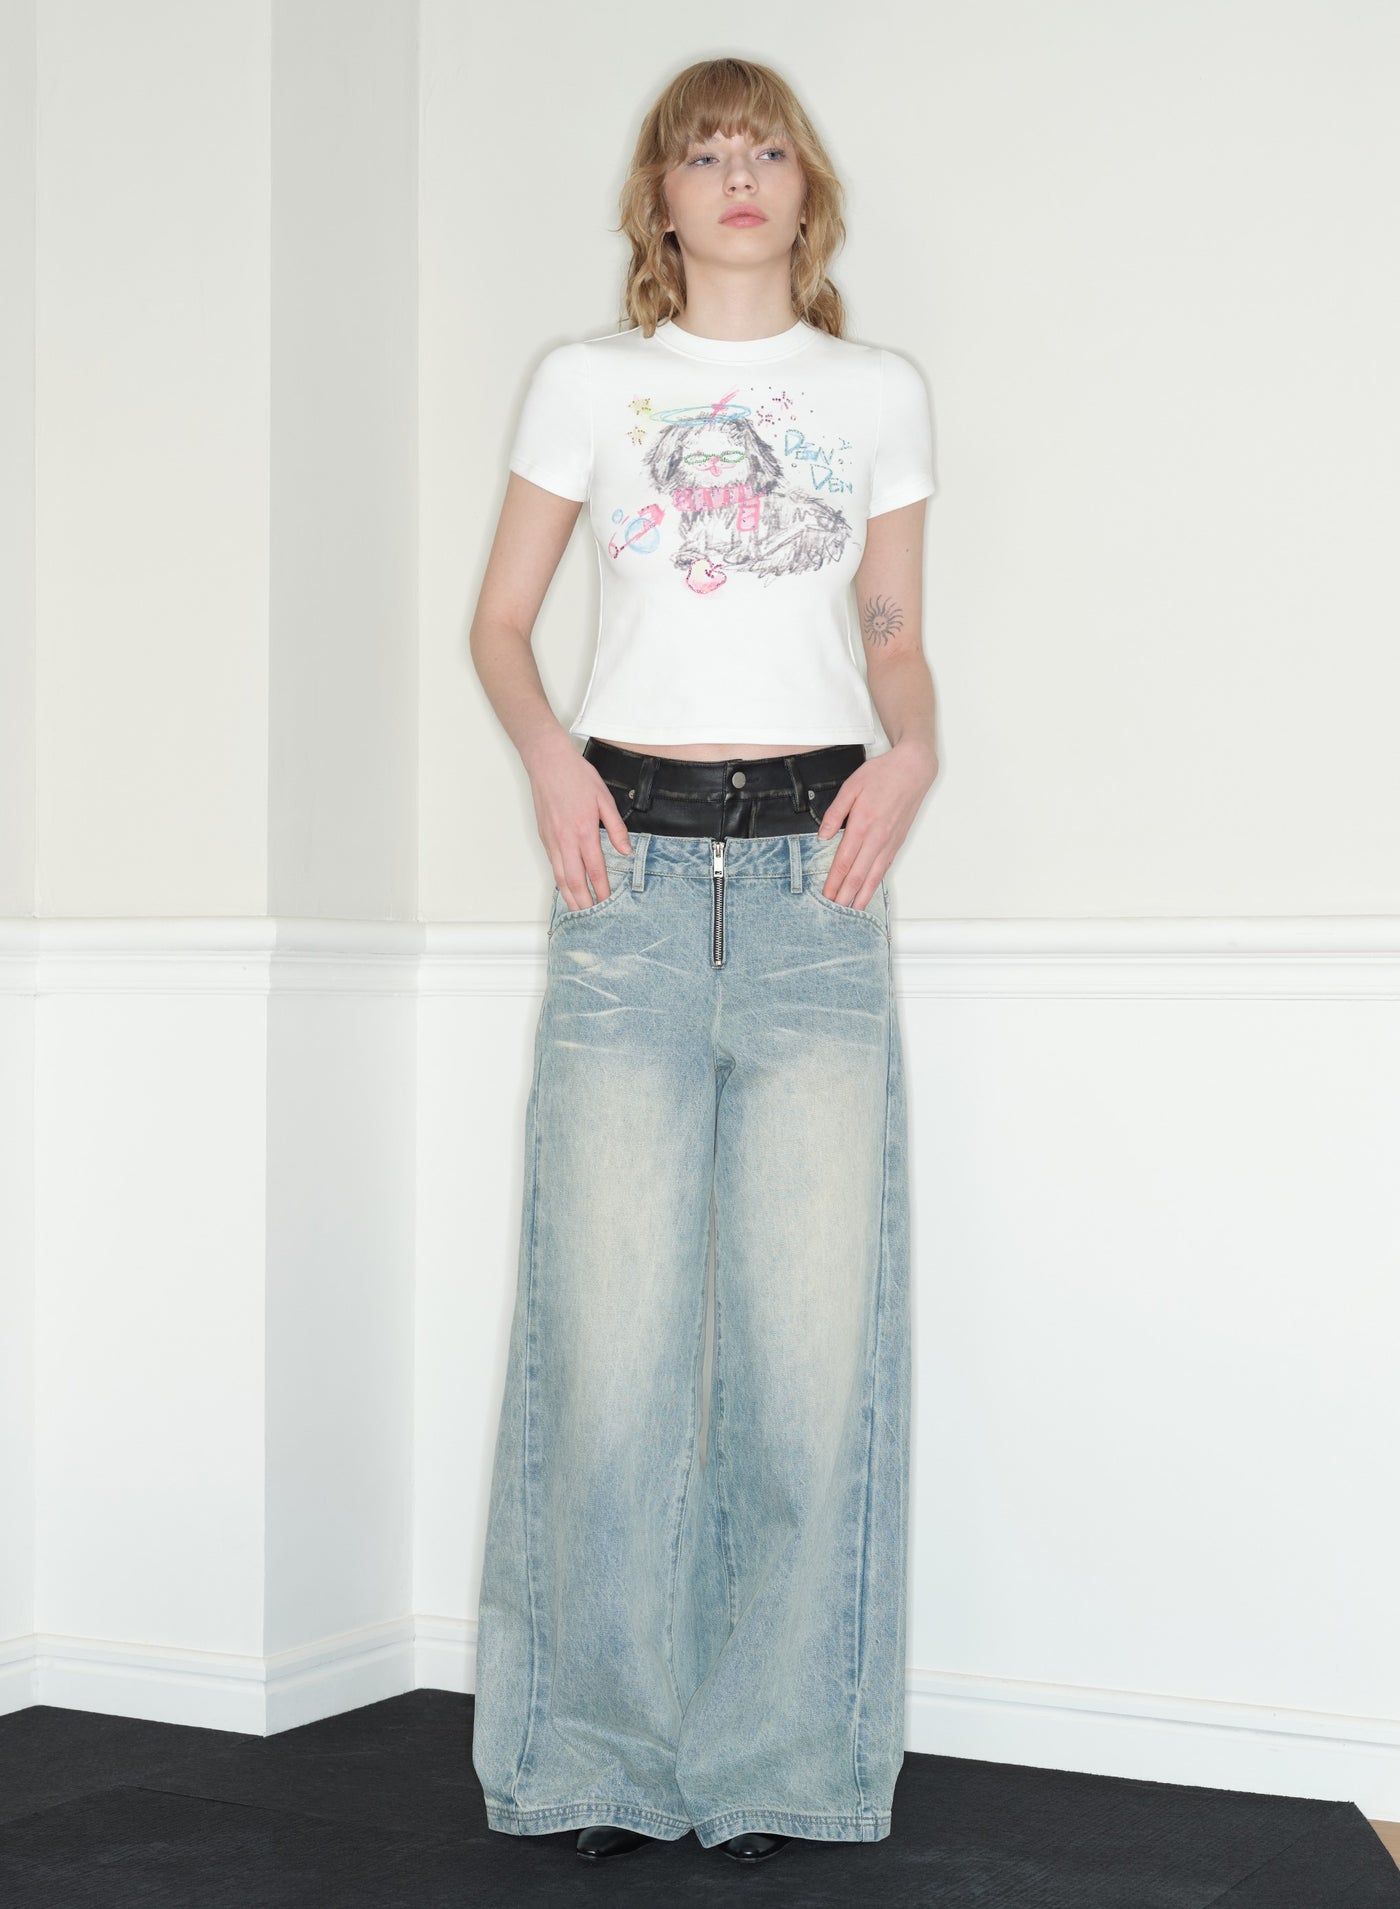 Double Waist High Street Low-rise Jeans RUN0040